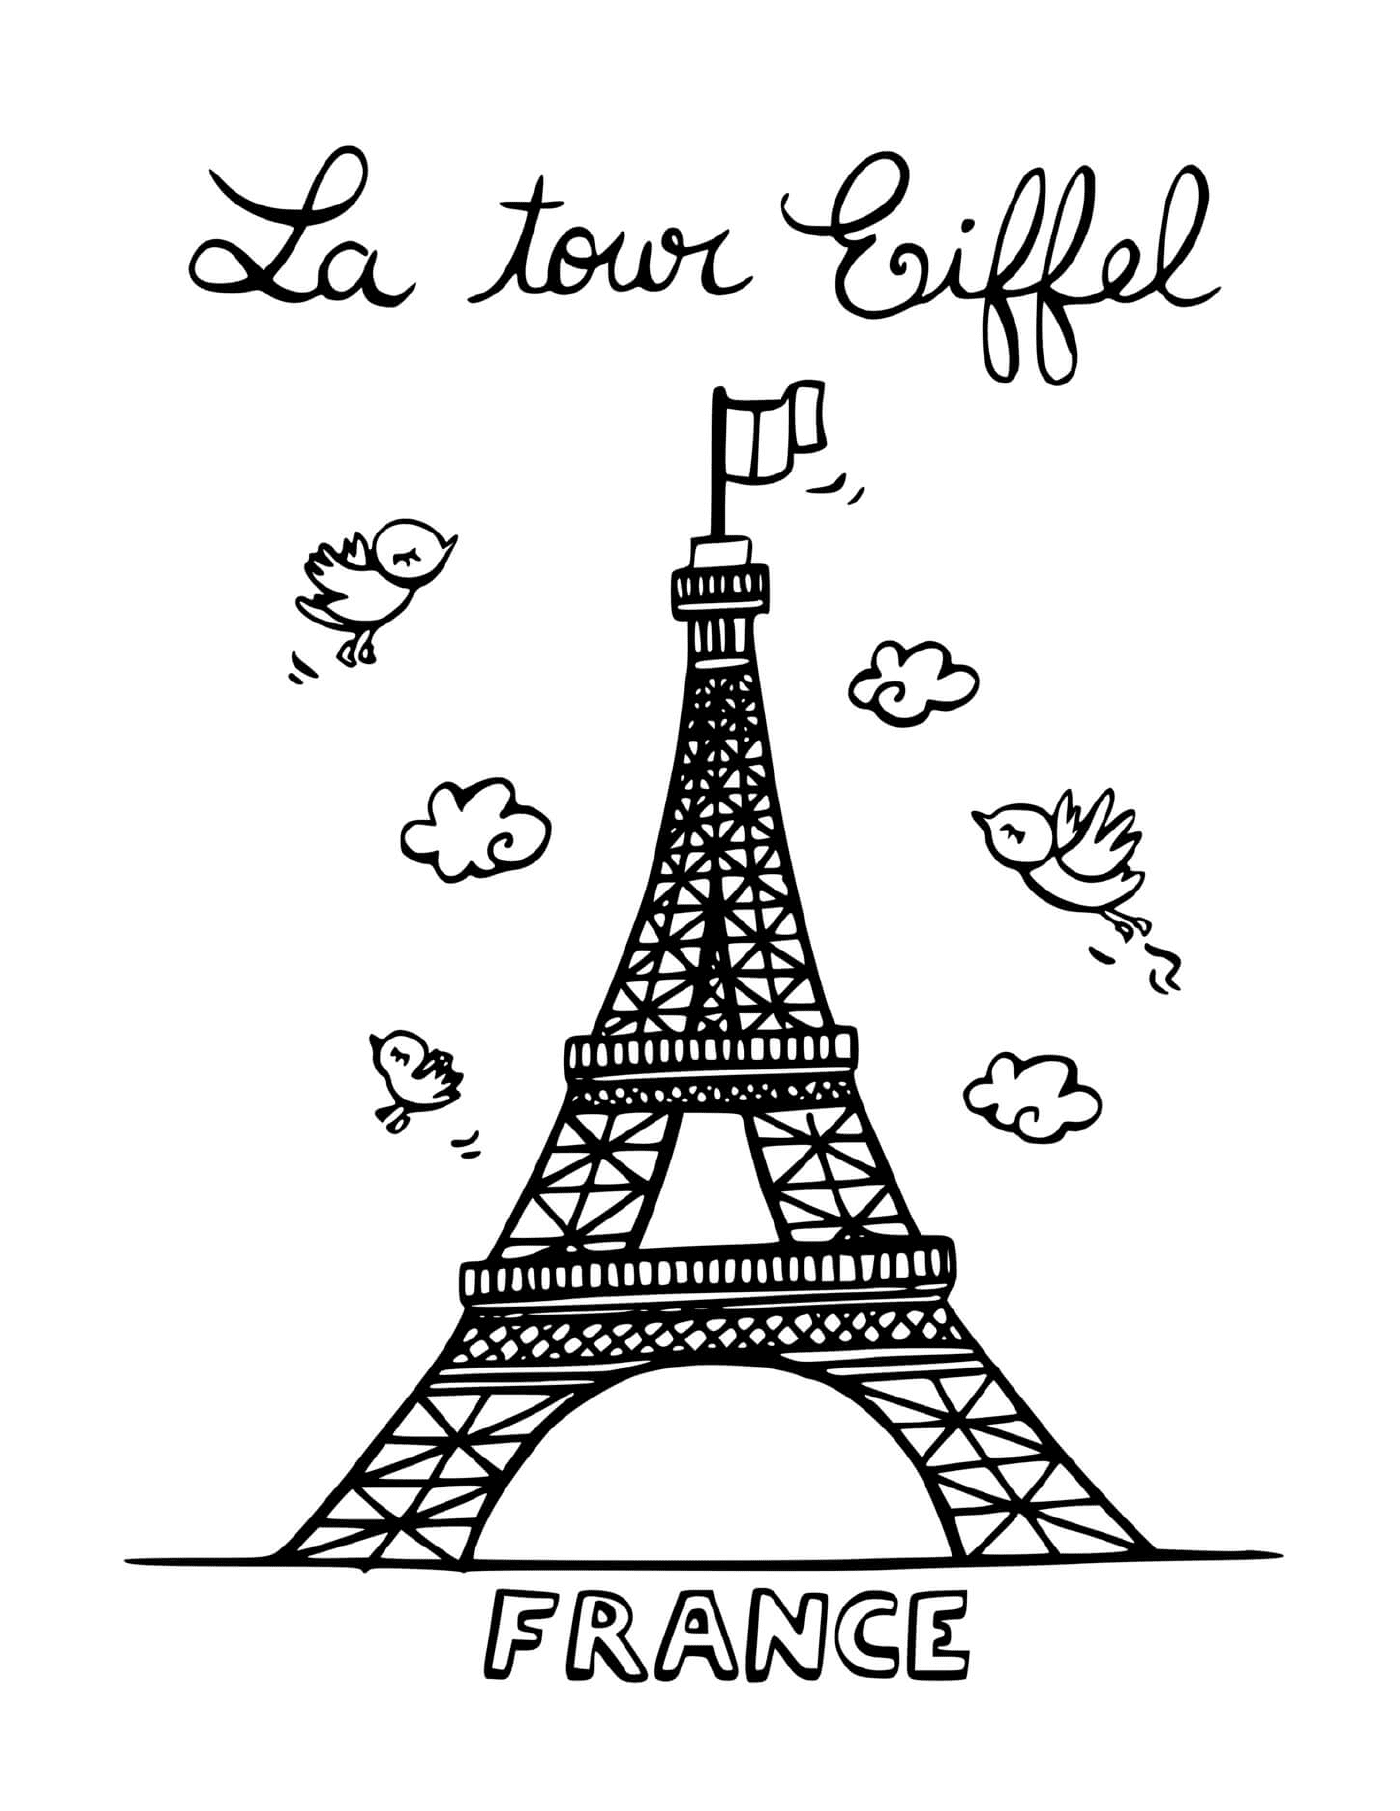  La Torre Eiffel di Parigi in Francia 